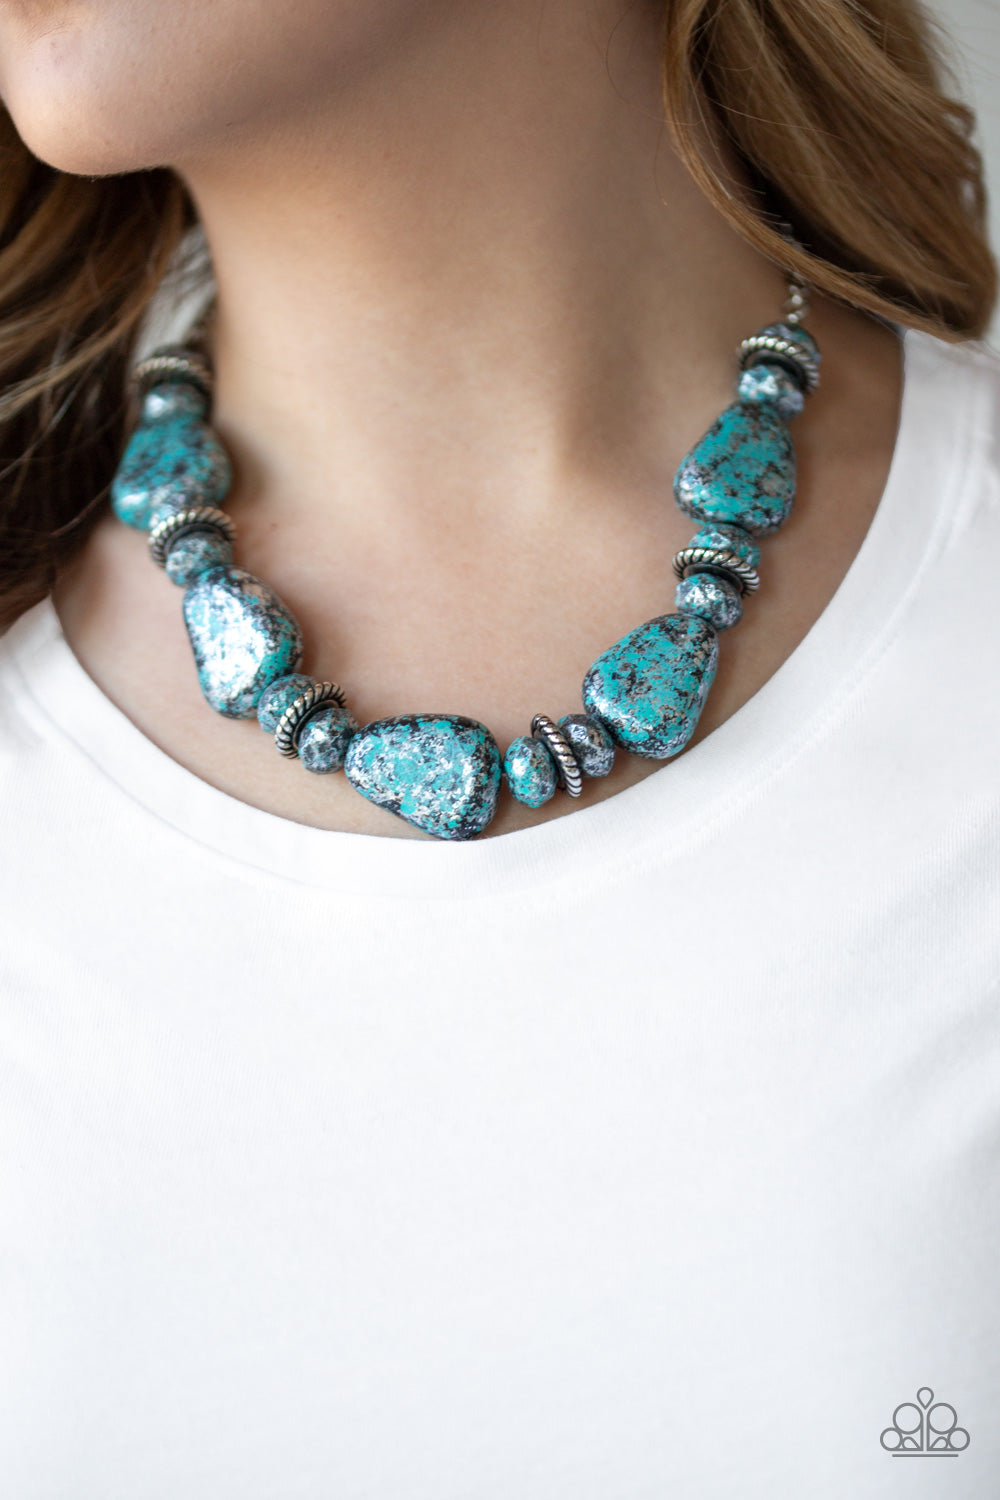 Prehistoric Fashionista- Blue Necklace